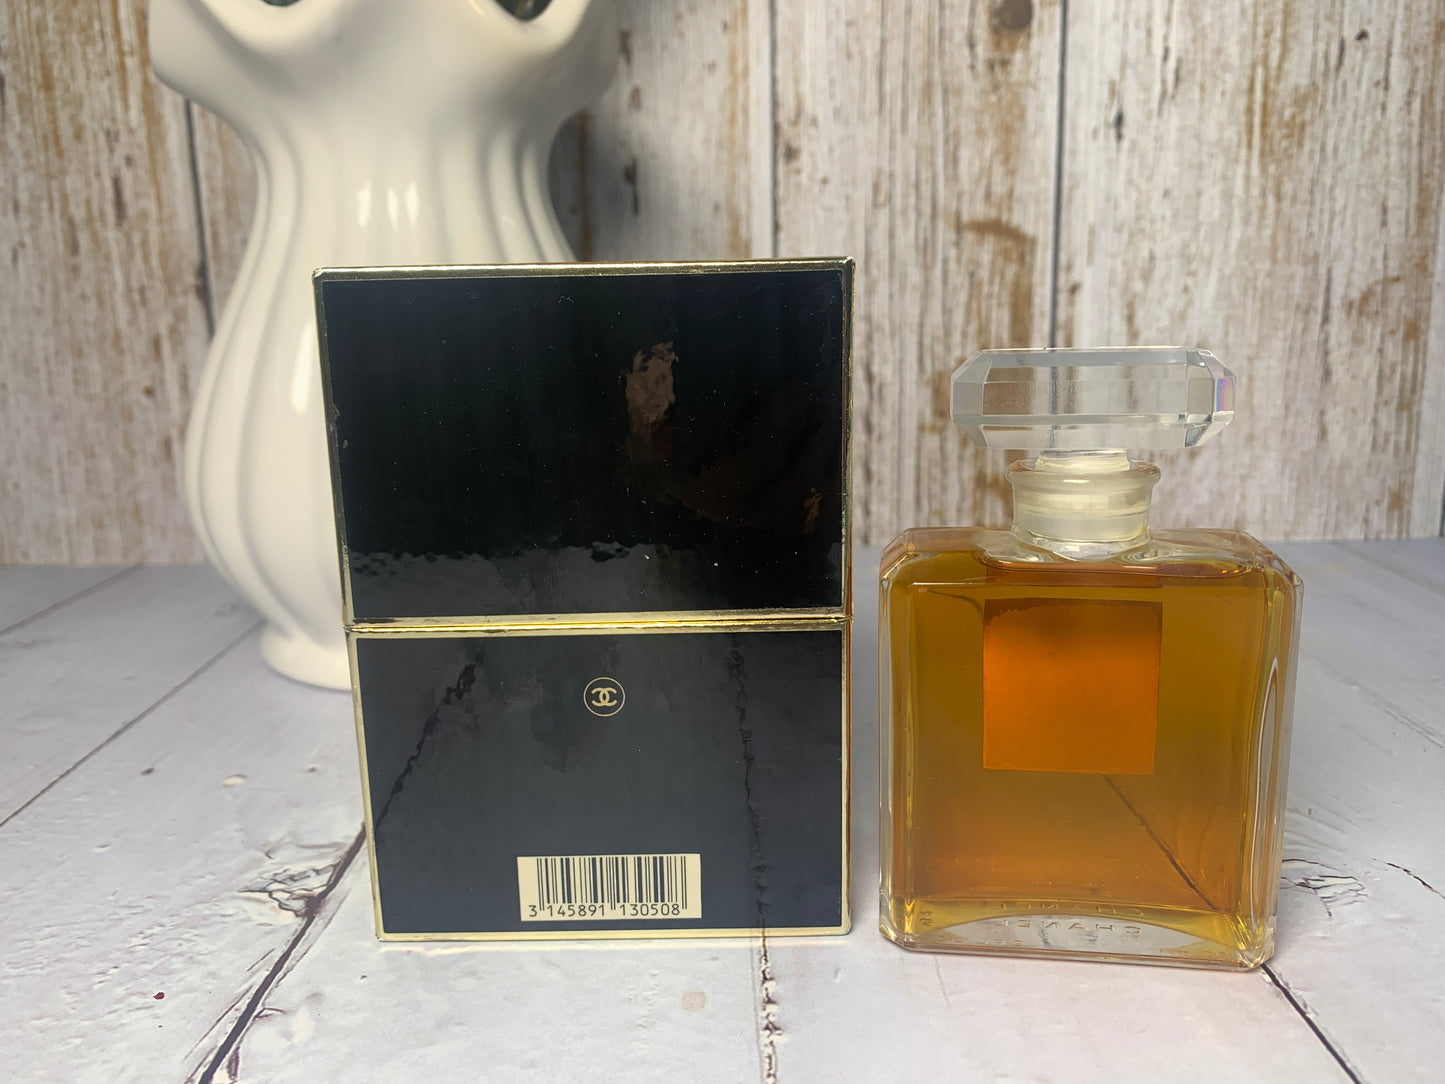 Rare Chanel Coco 60ml 2 oz Perfume parfum - 190423-2